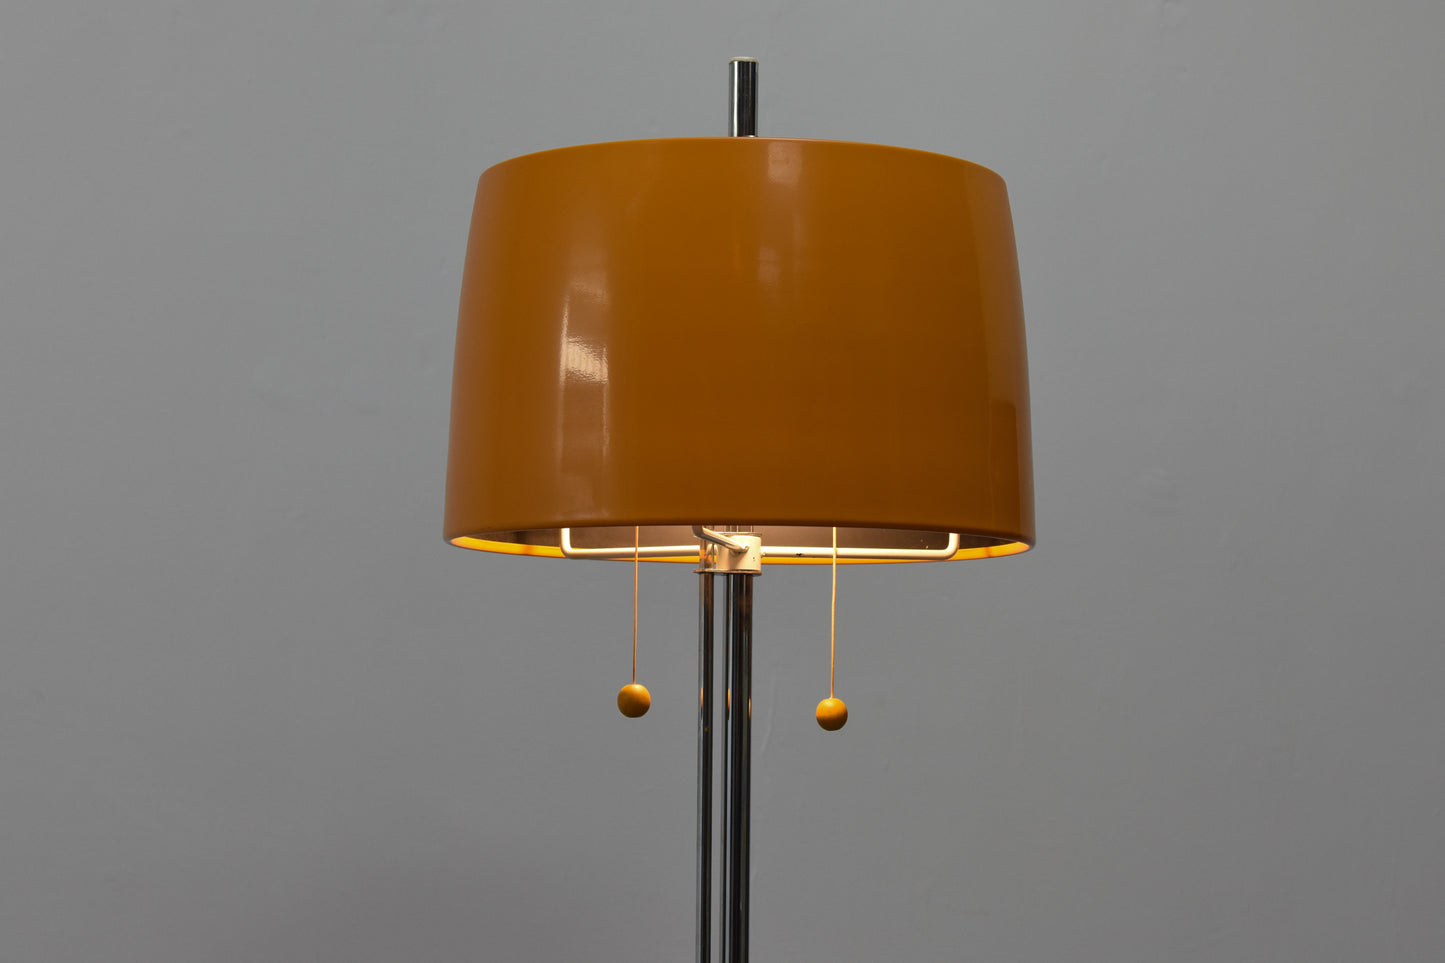 1960s floor lamp by Börje Claes